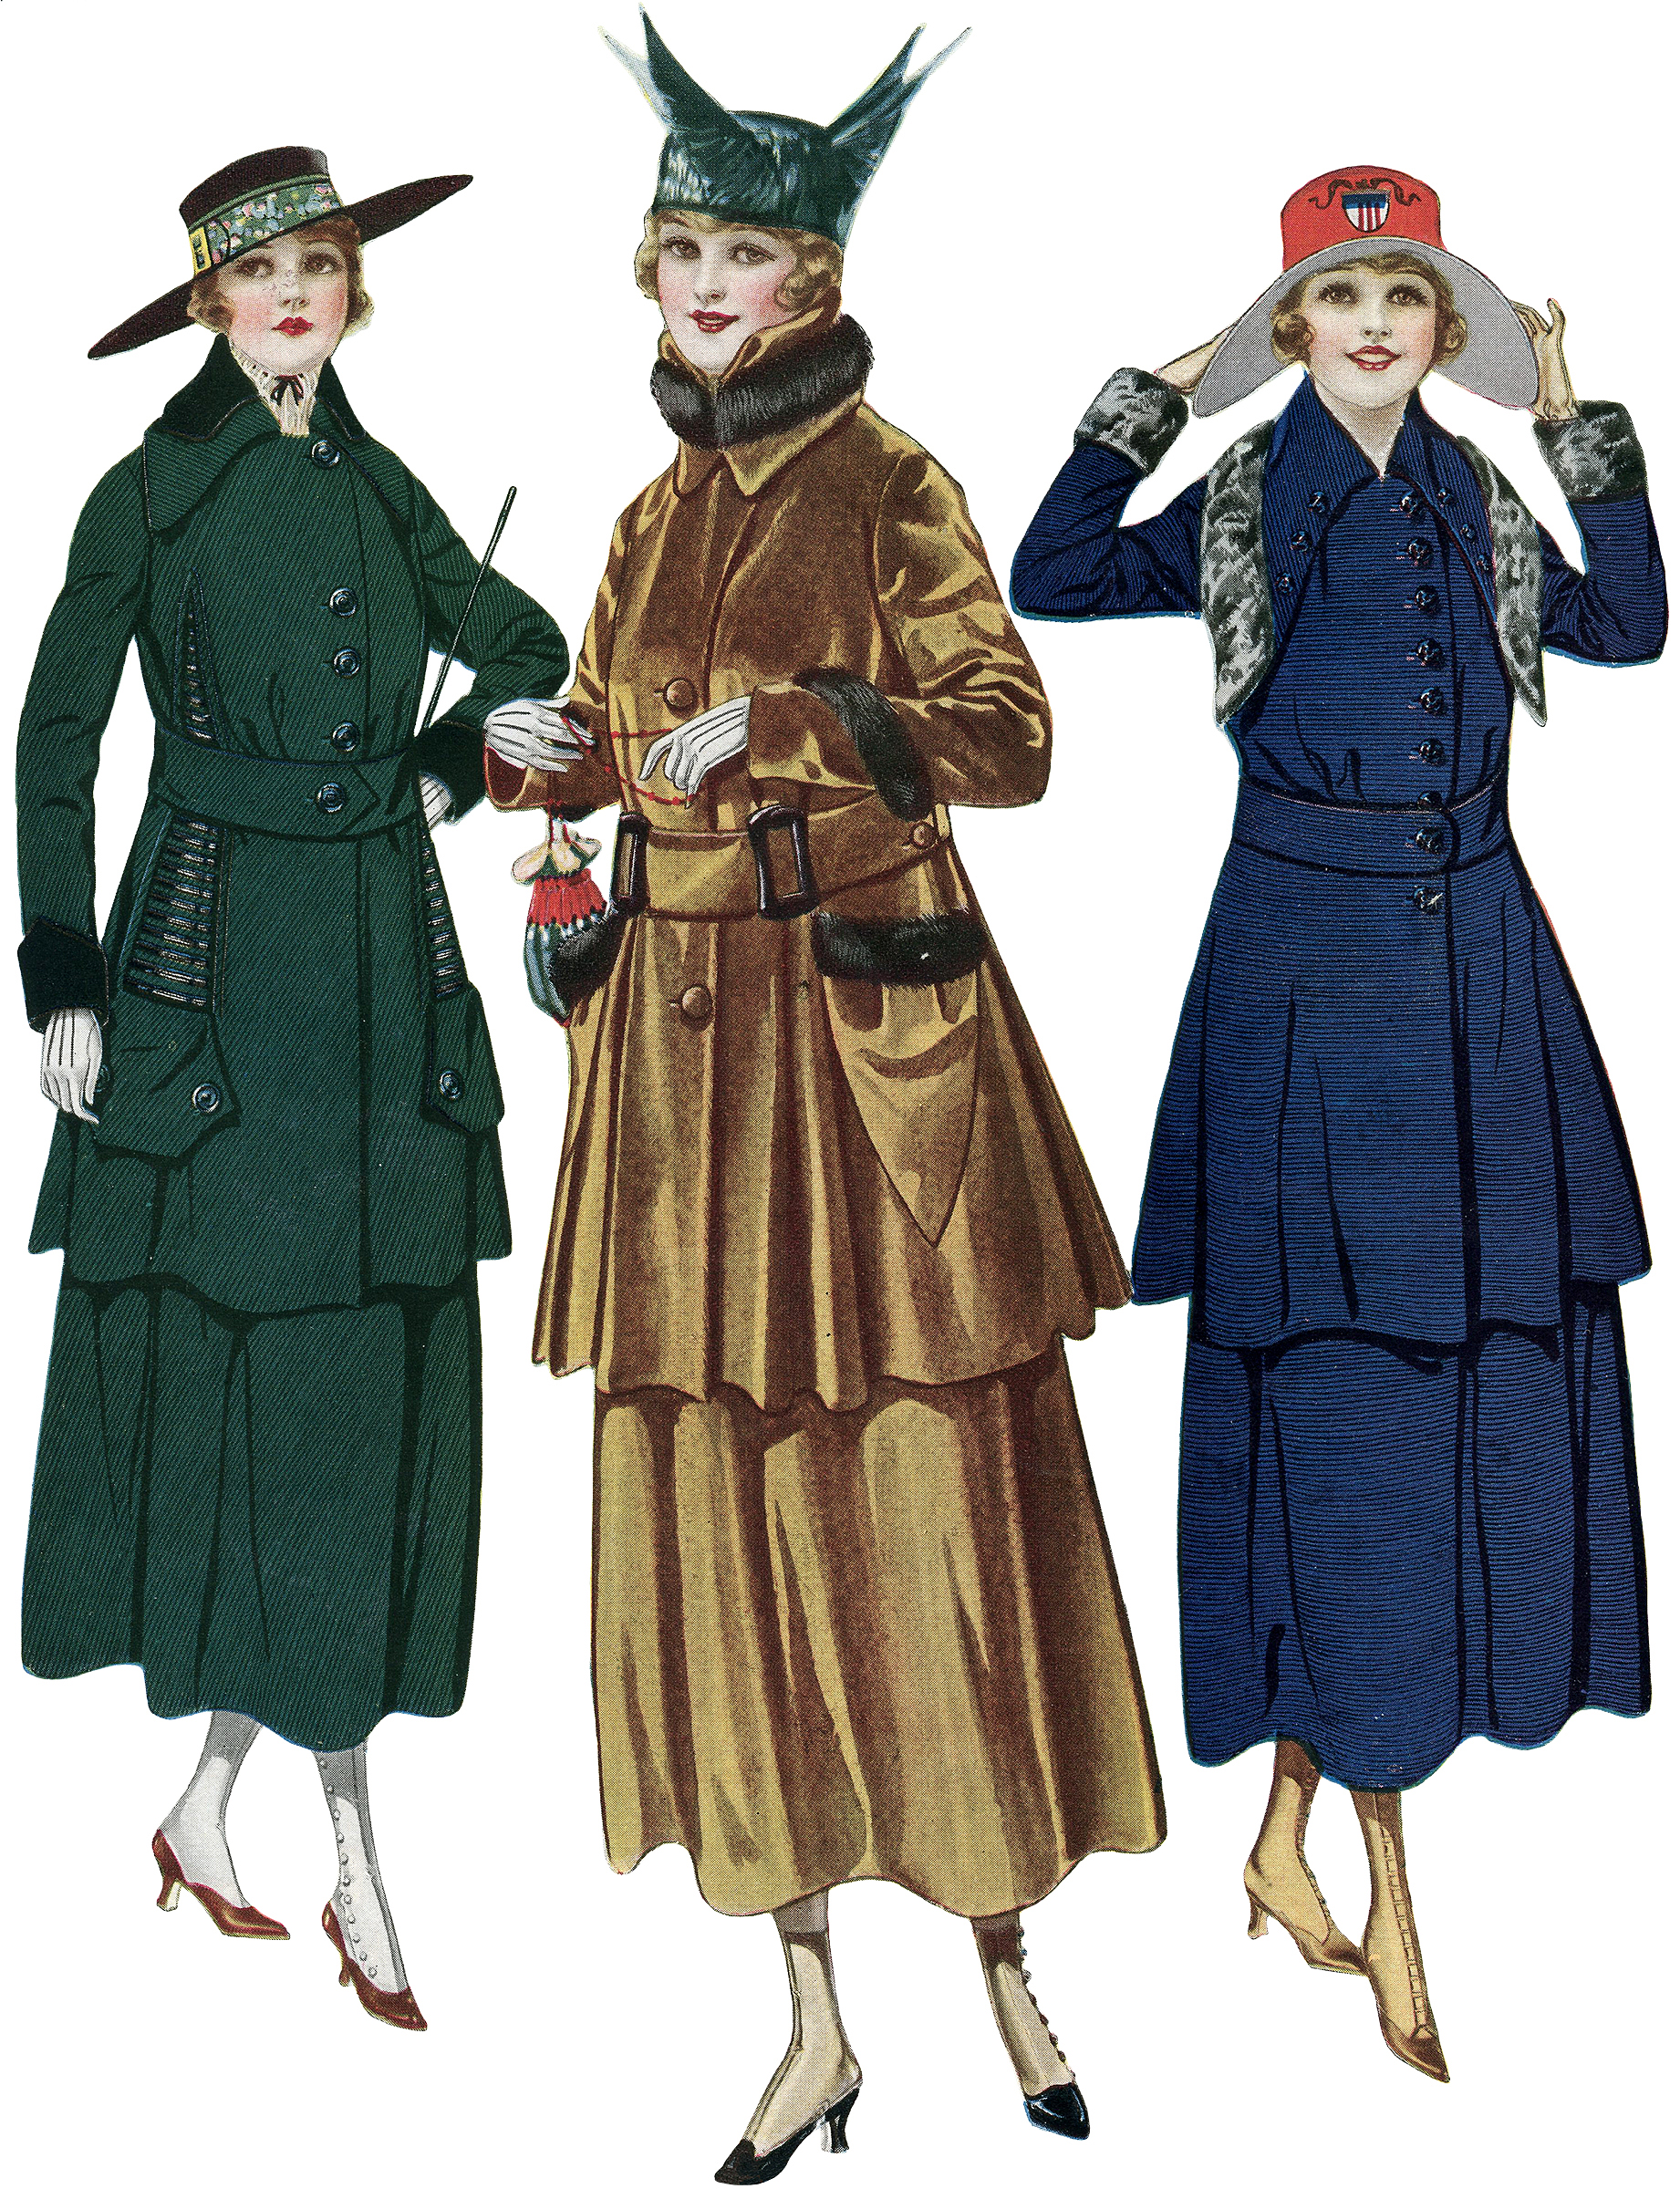 14 Edwardian Fashion Images - (Women's Fashion) - The Graphics Fairy